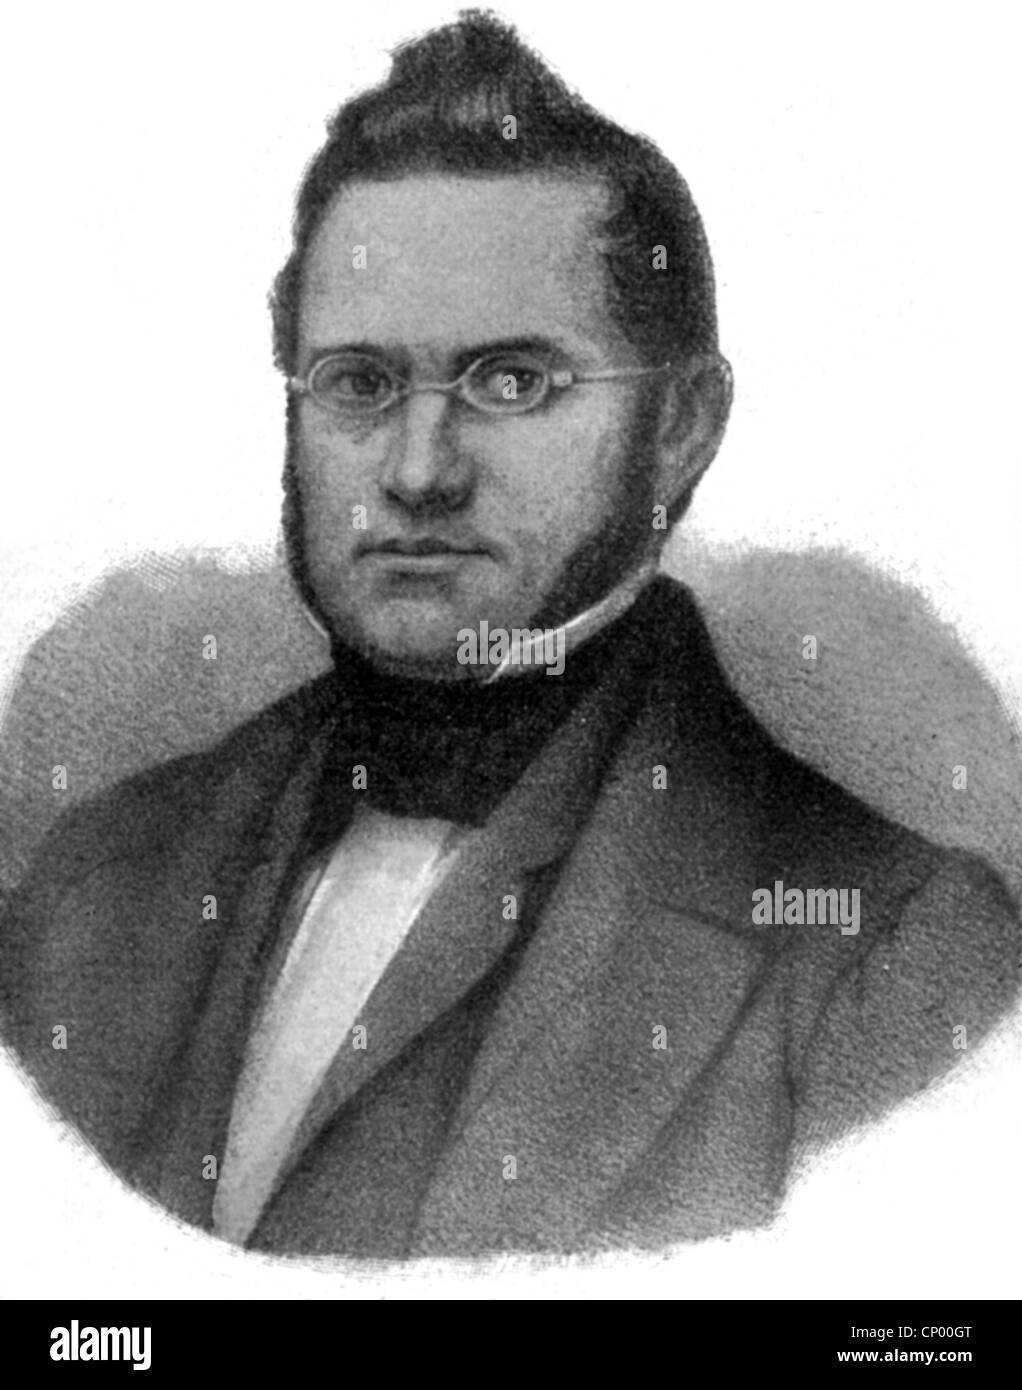 Furrer, Jonas, 3.3.1805 - 25.7.1861, Swiss politician, first President of the Confederation 1848, portrait, 19th century, Stock Photo